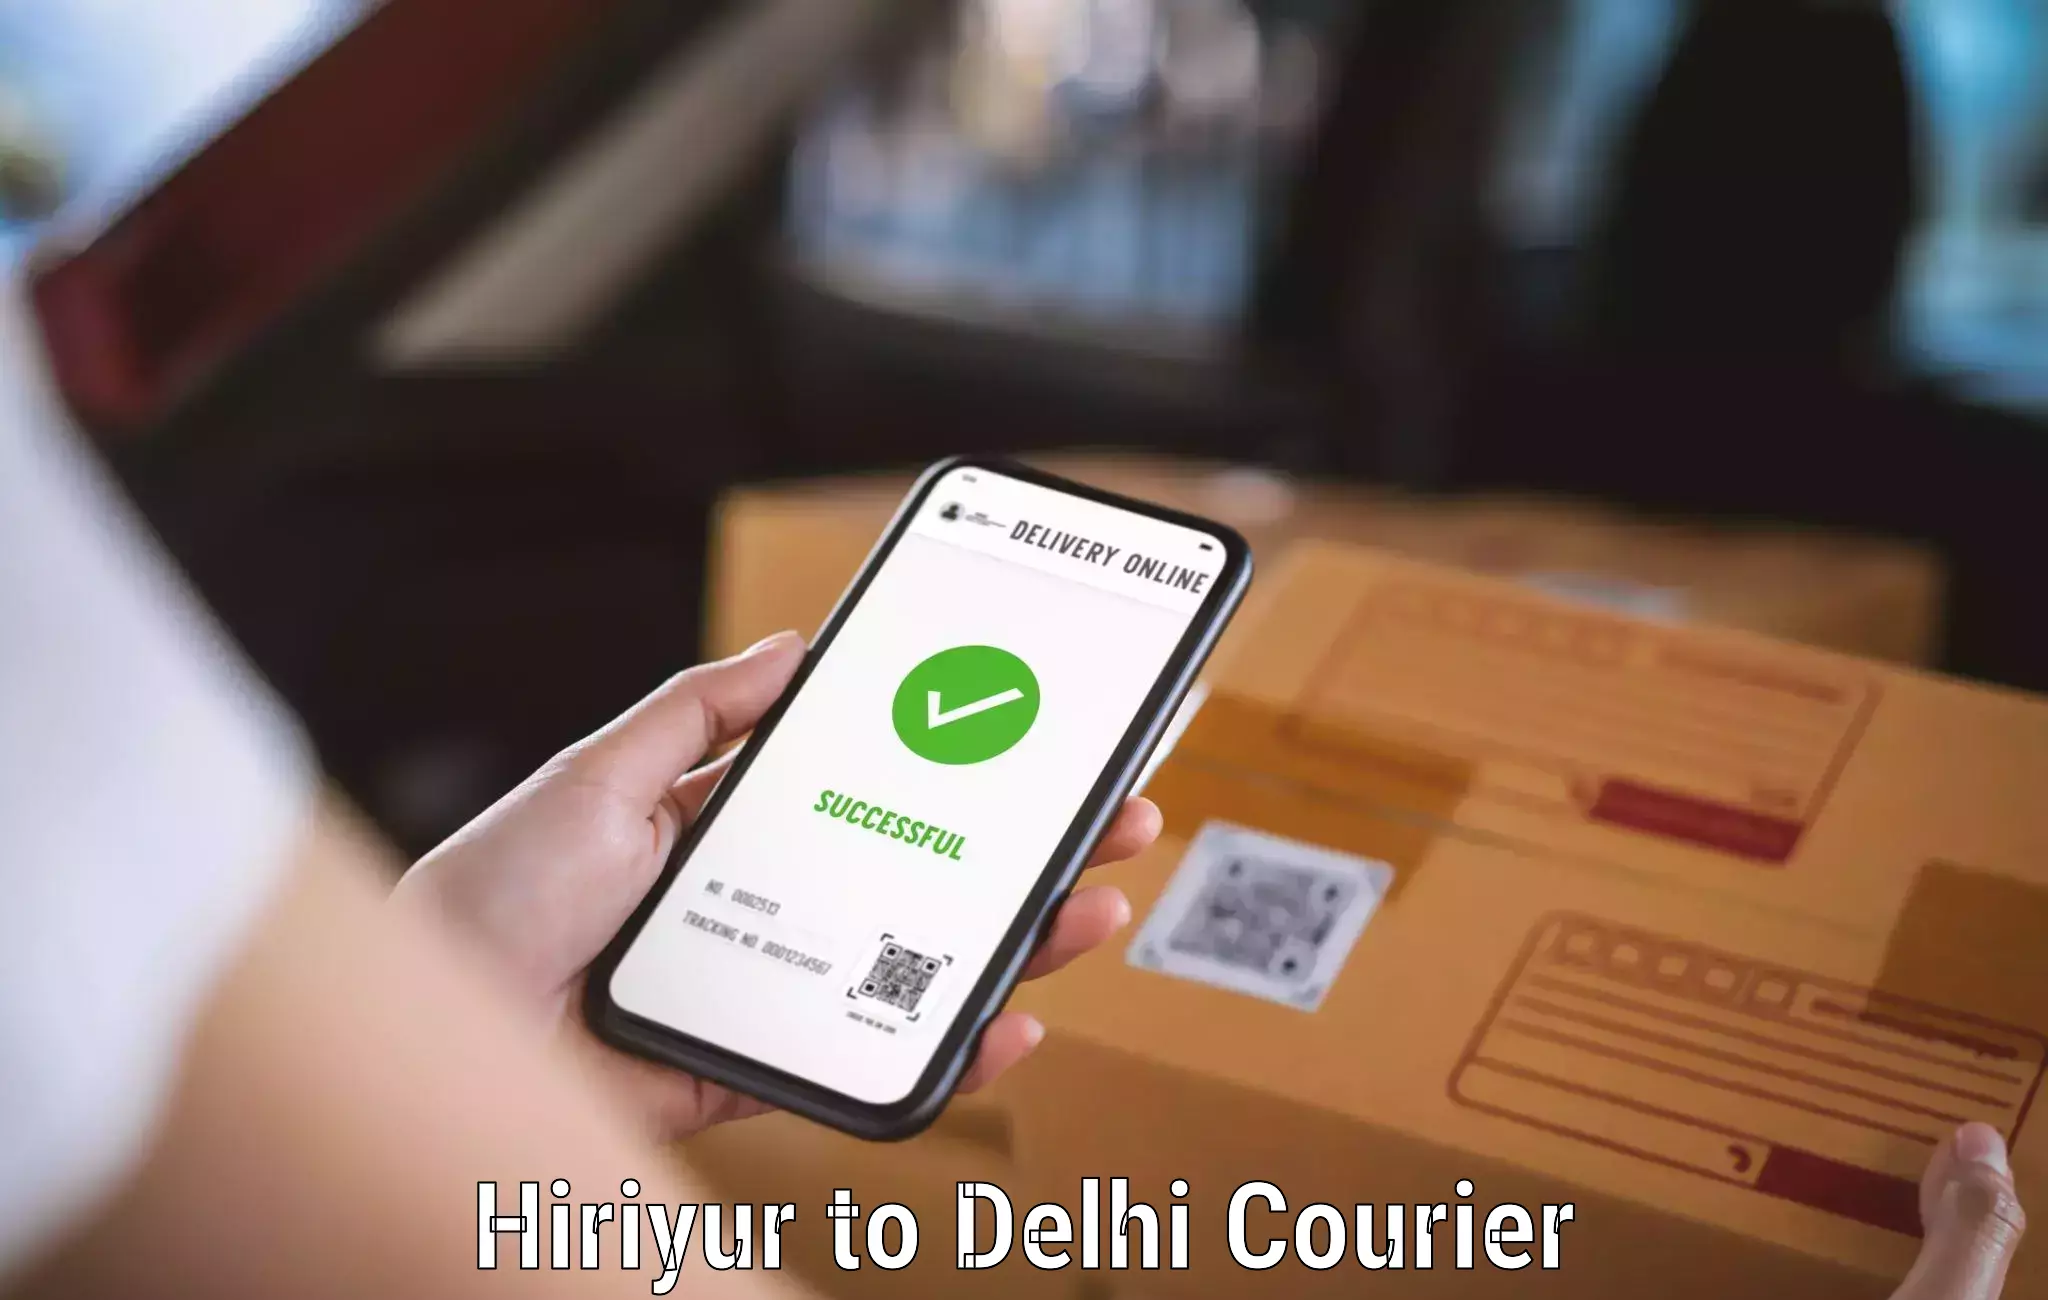 Courier service partnerships Hiriyur to Delhi